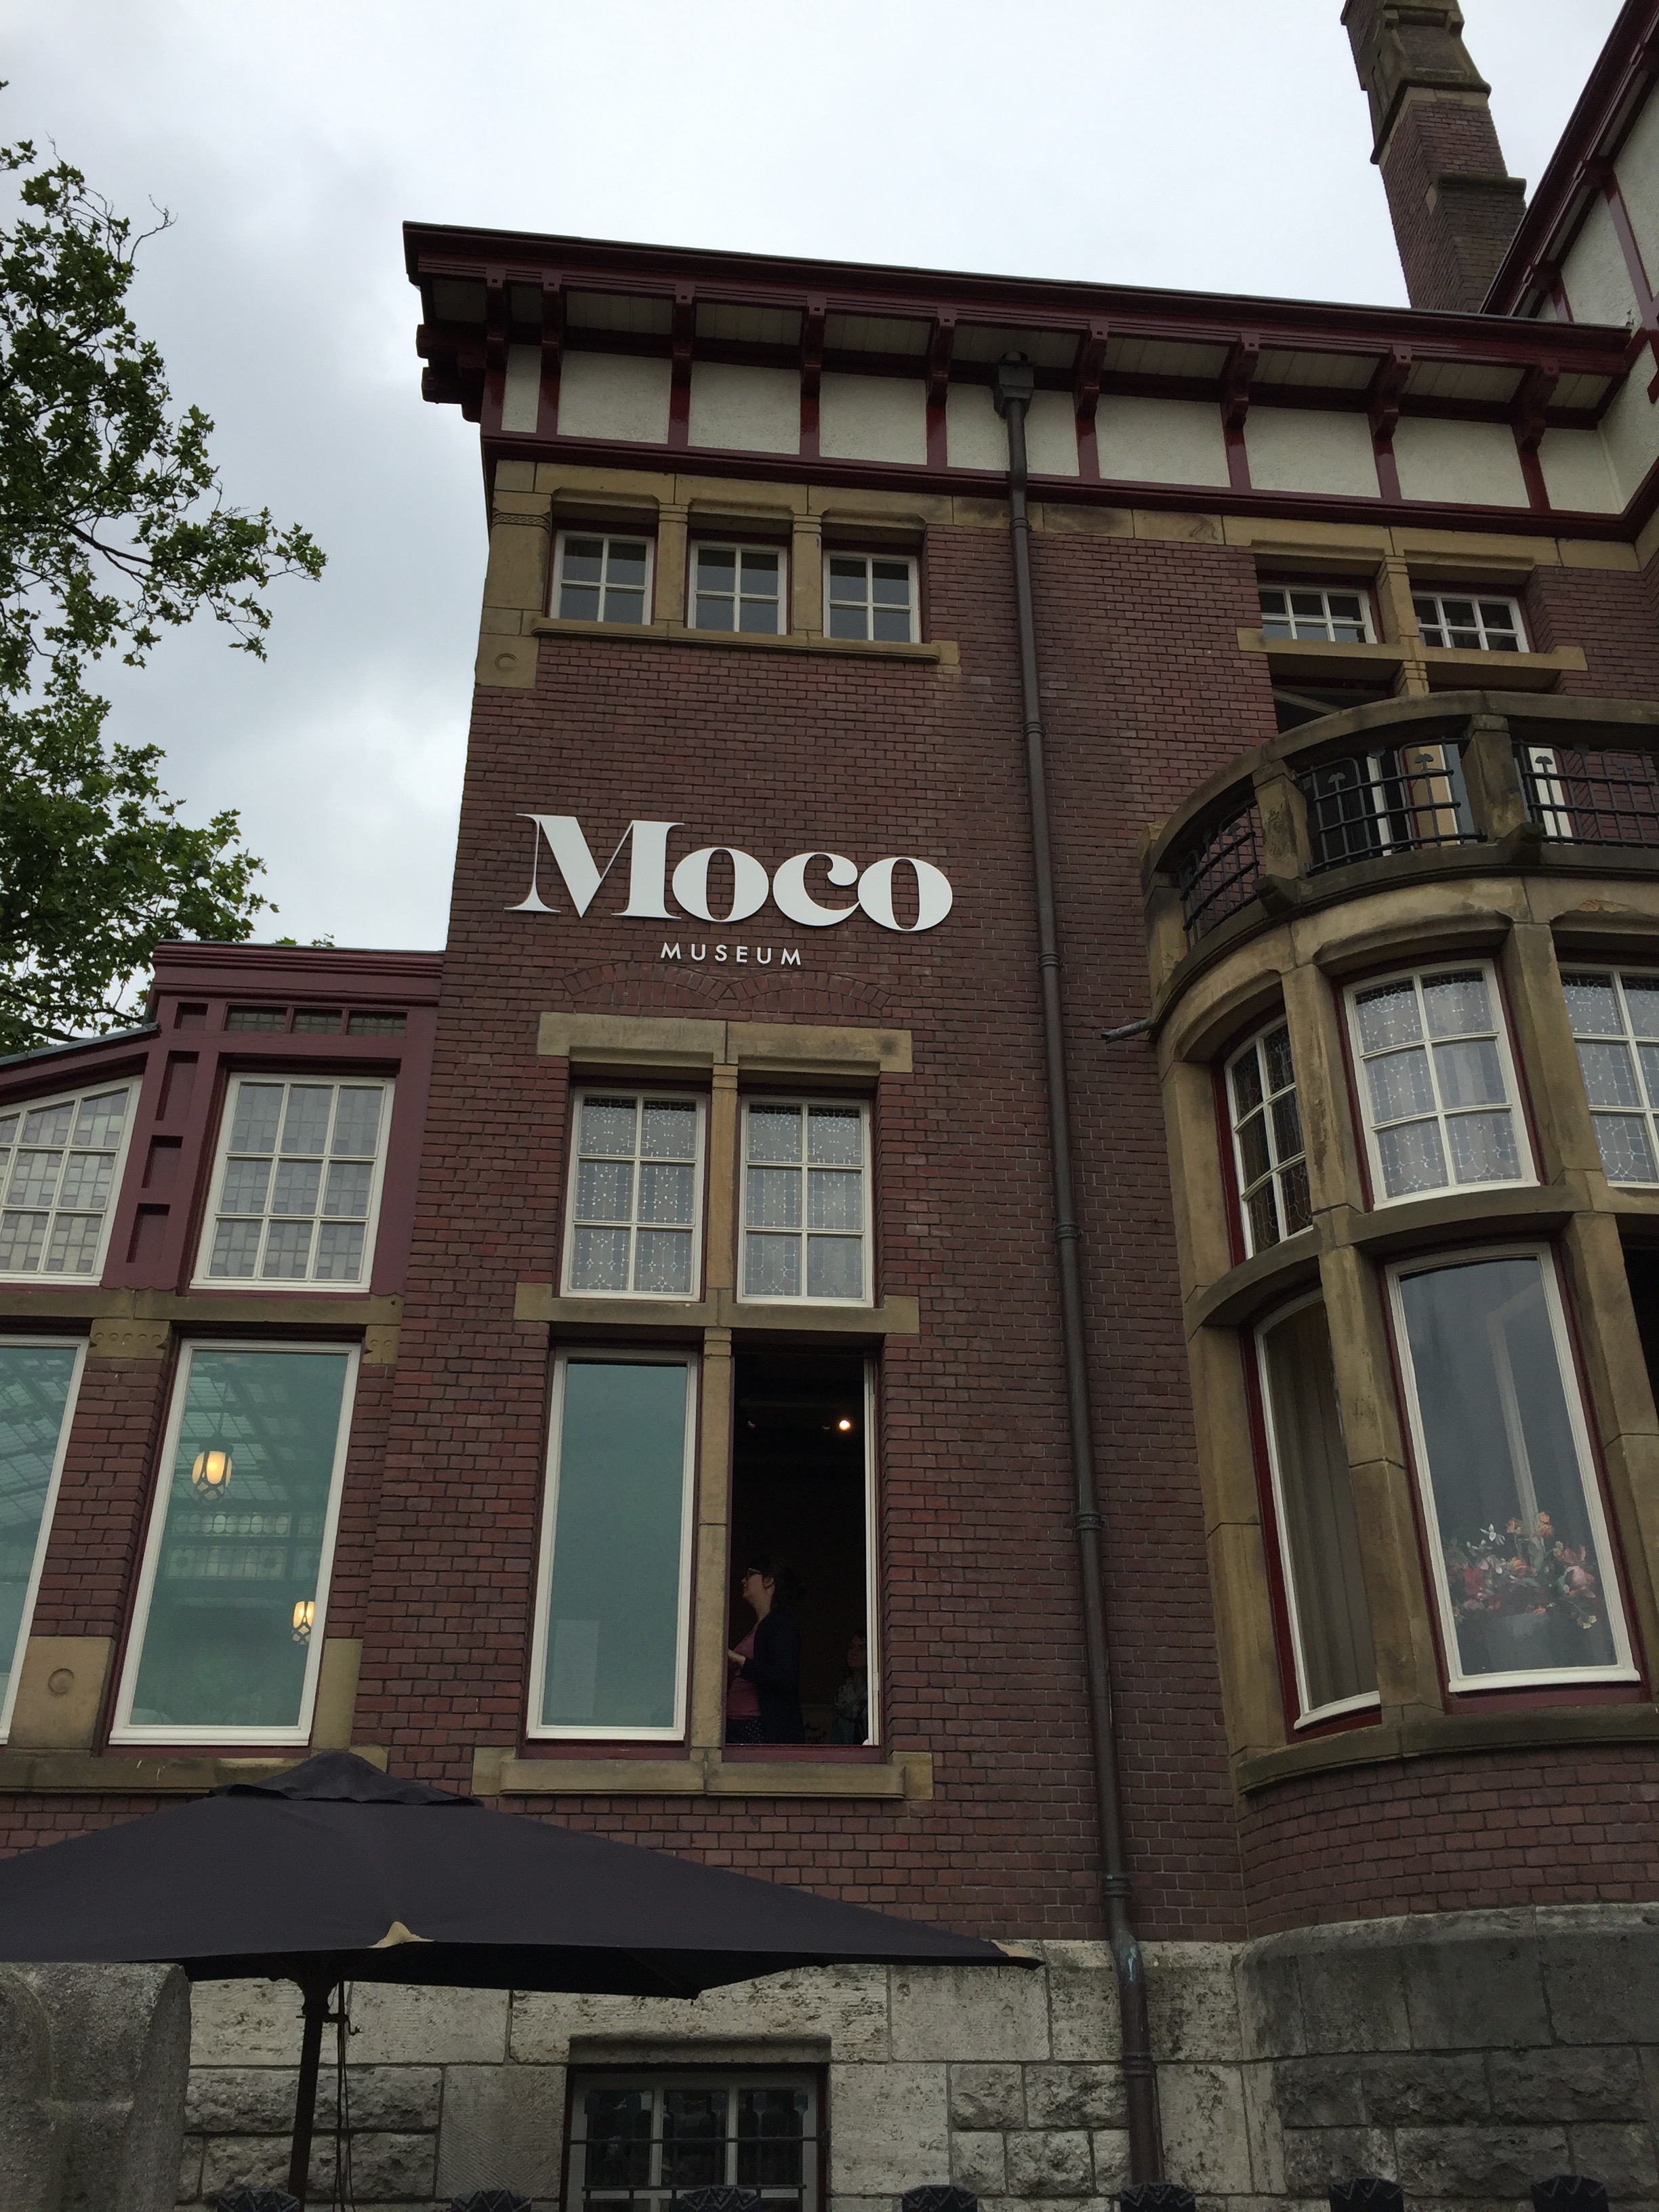 Moco Museum building in Amsterdam